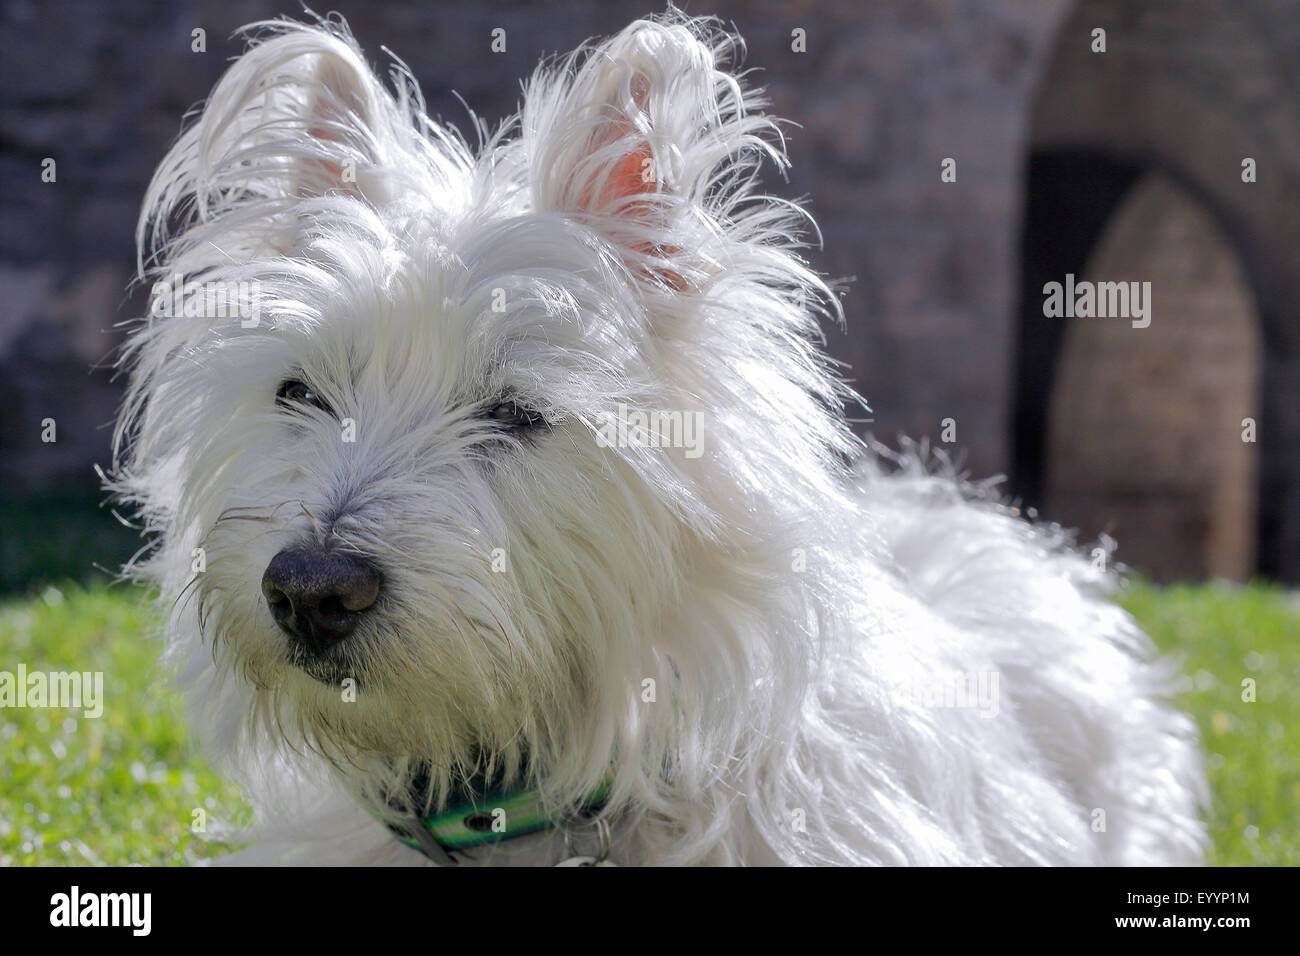 West Highland White Terrier puppy, Stock Photo